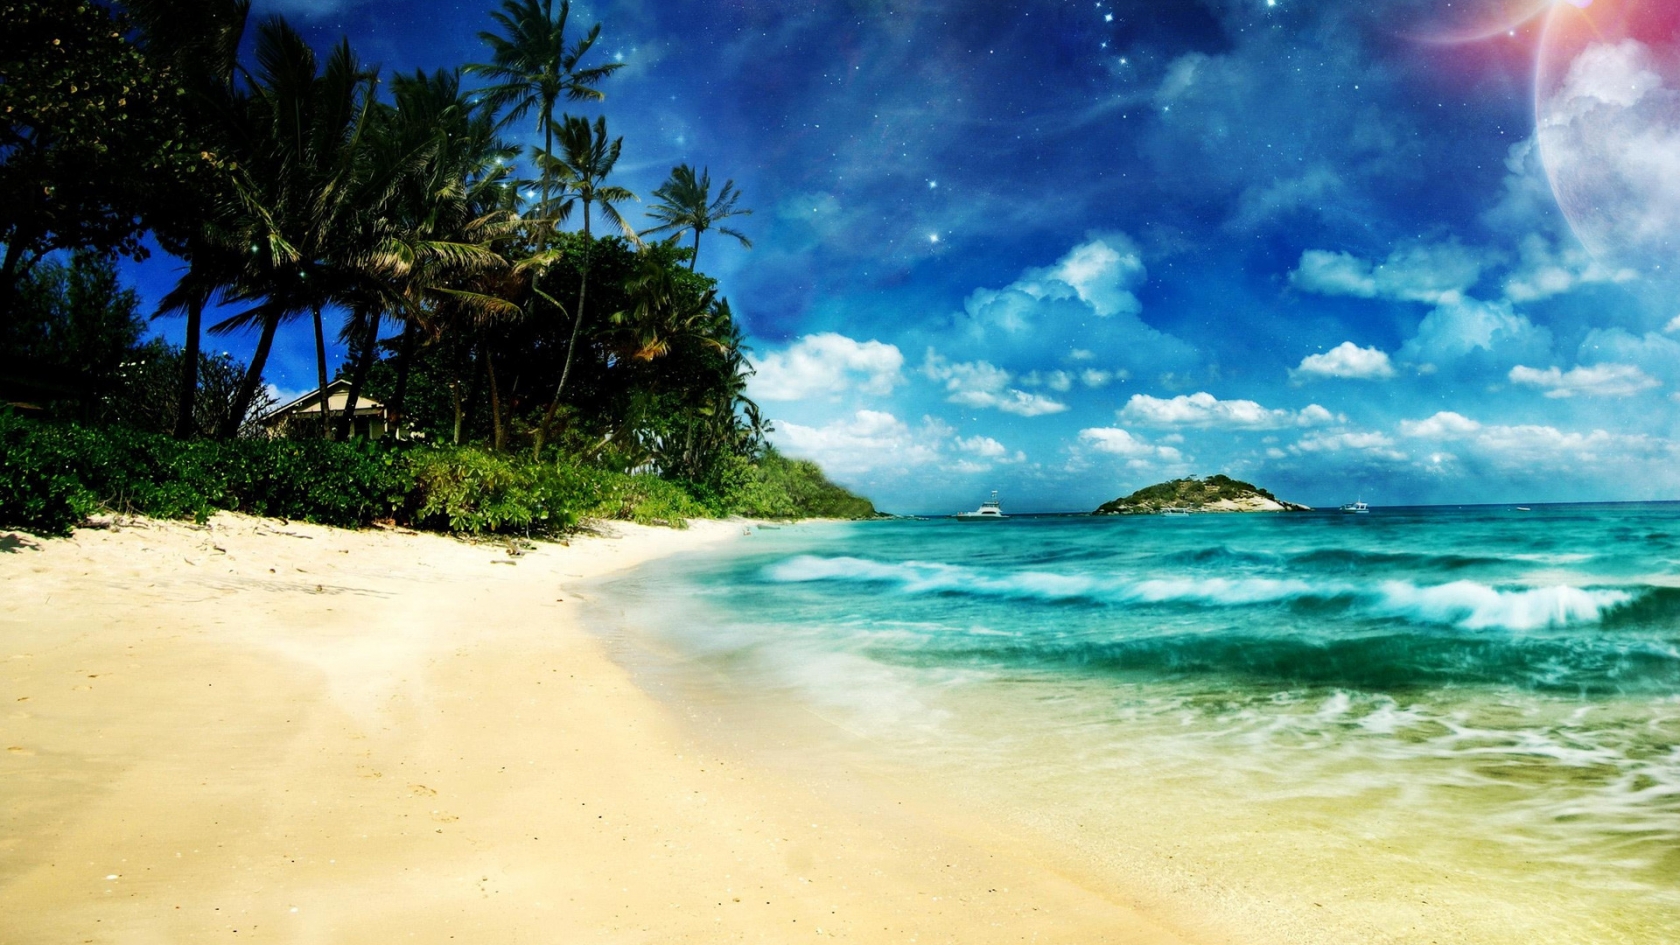 Superb Ocean Beach for 1680 x 945 HDTV resolution